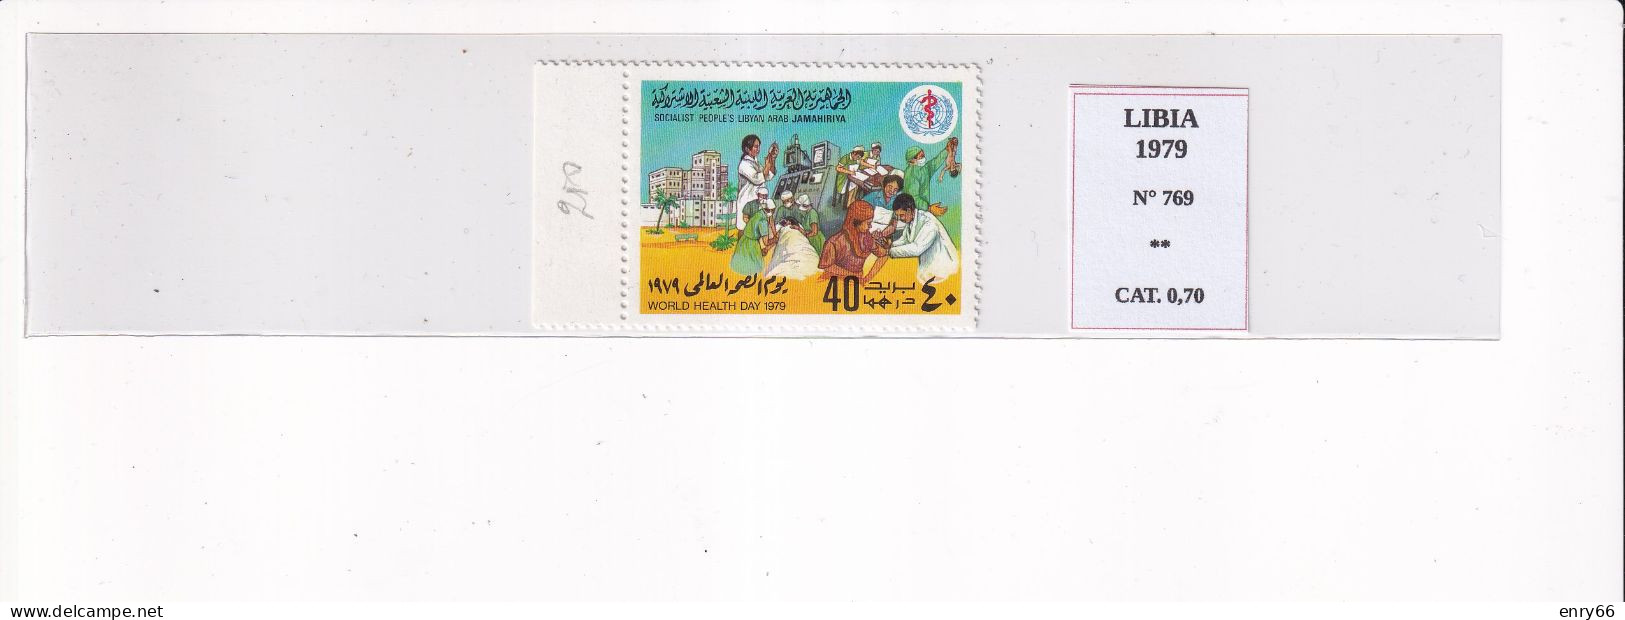 LIBIA 1979 N°769 MNH - Libia